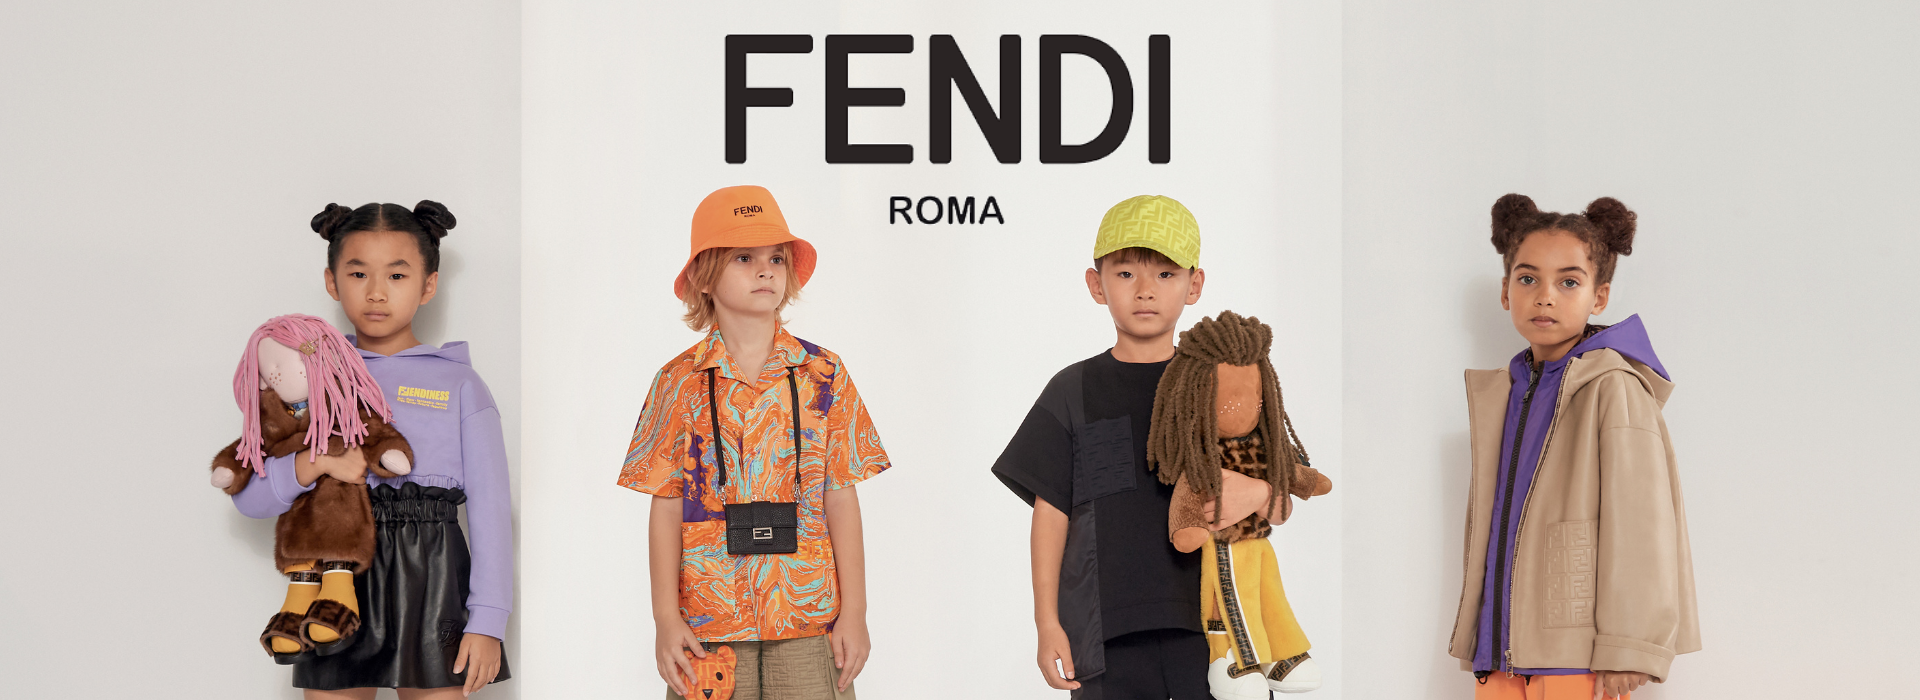 Fendi Kids Clothes